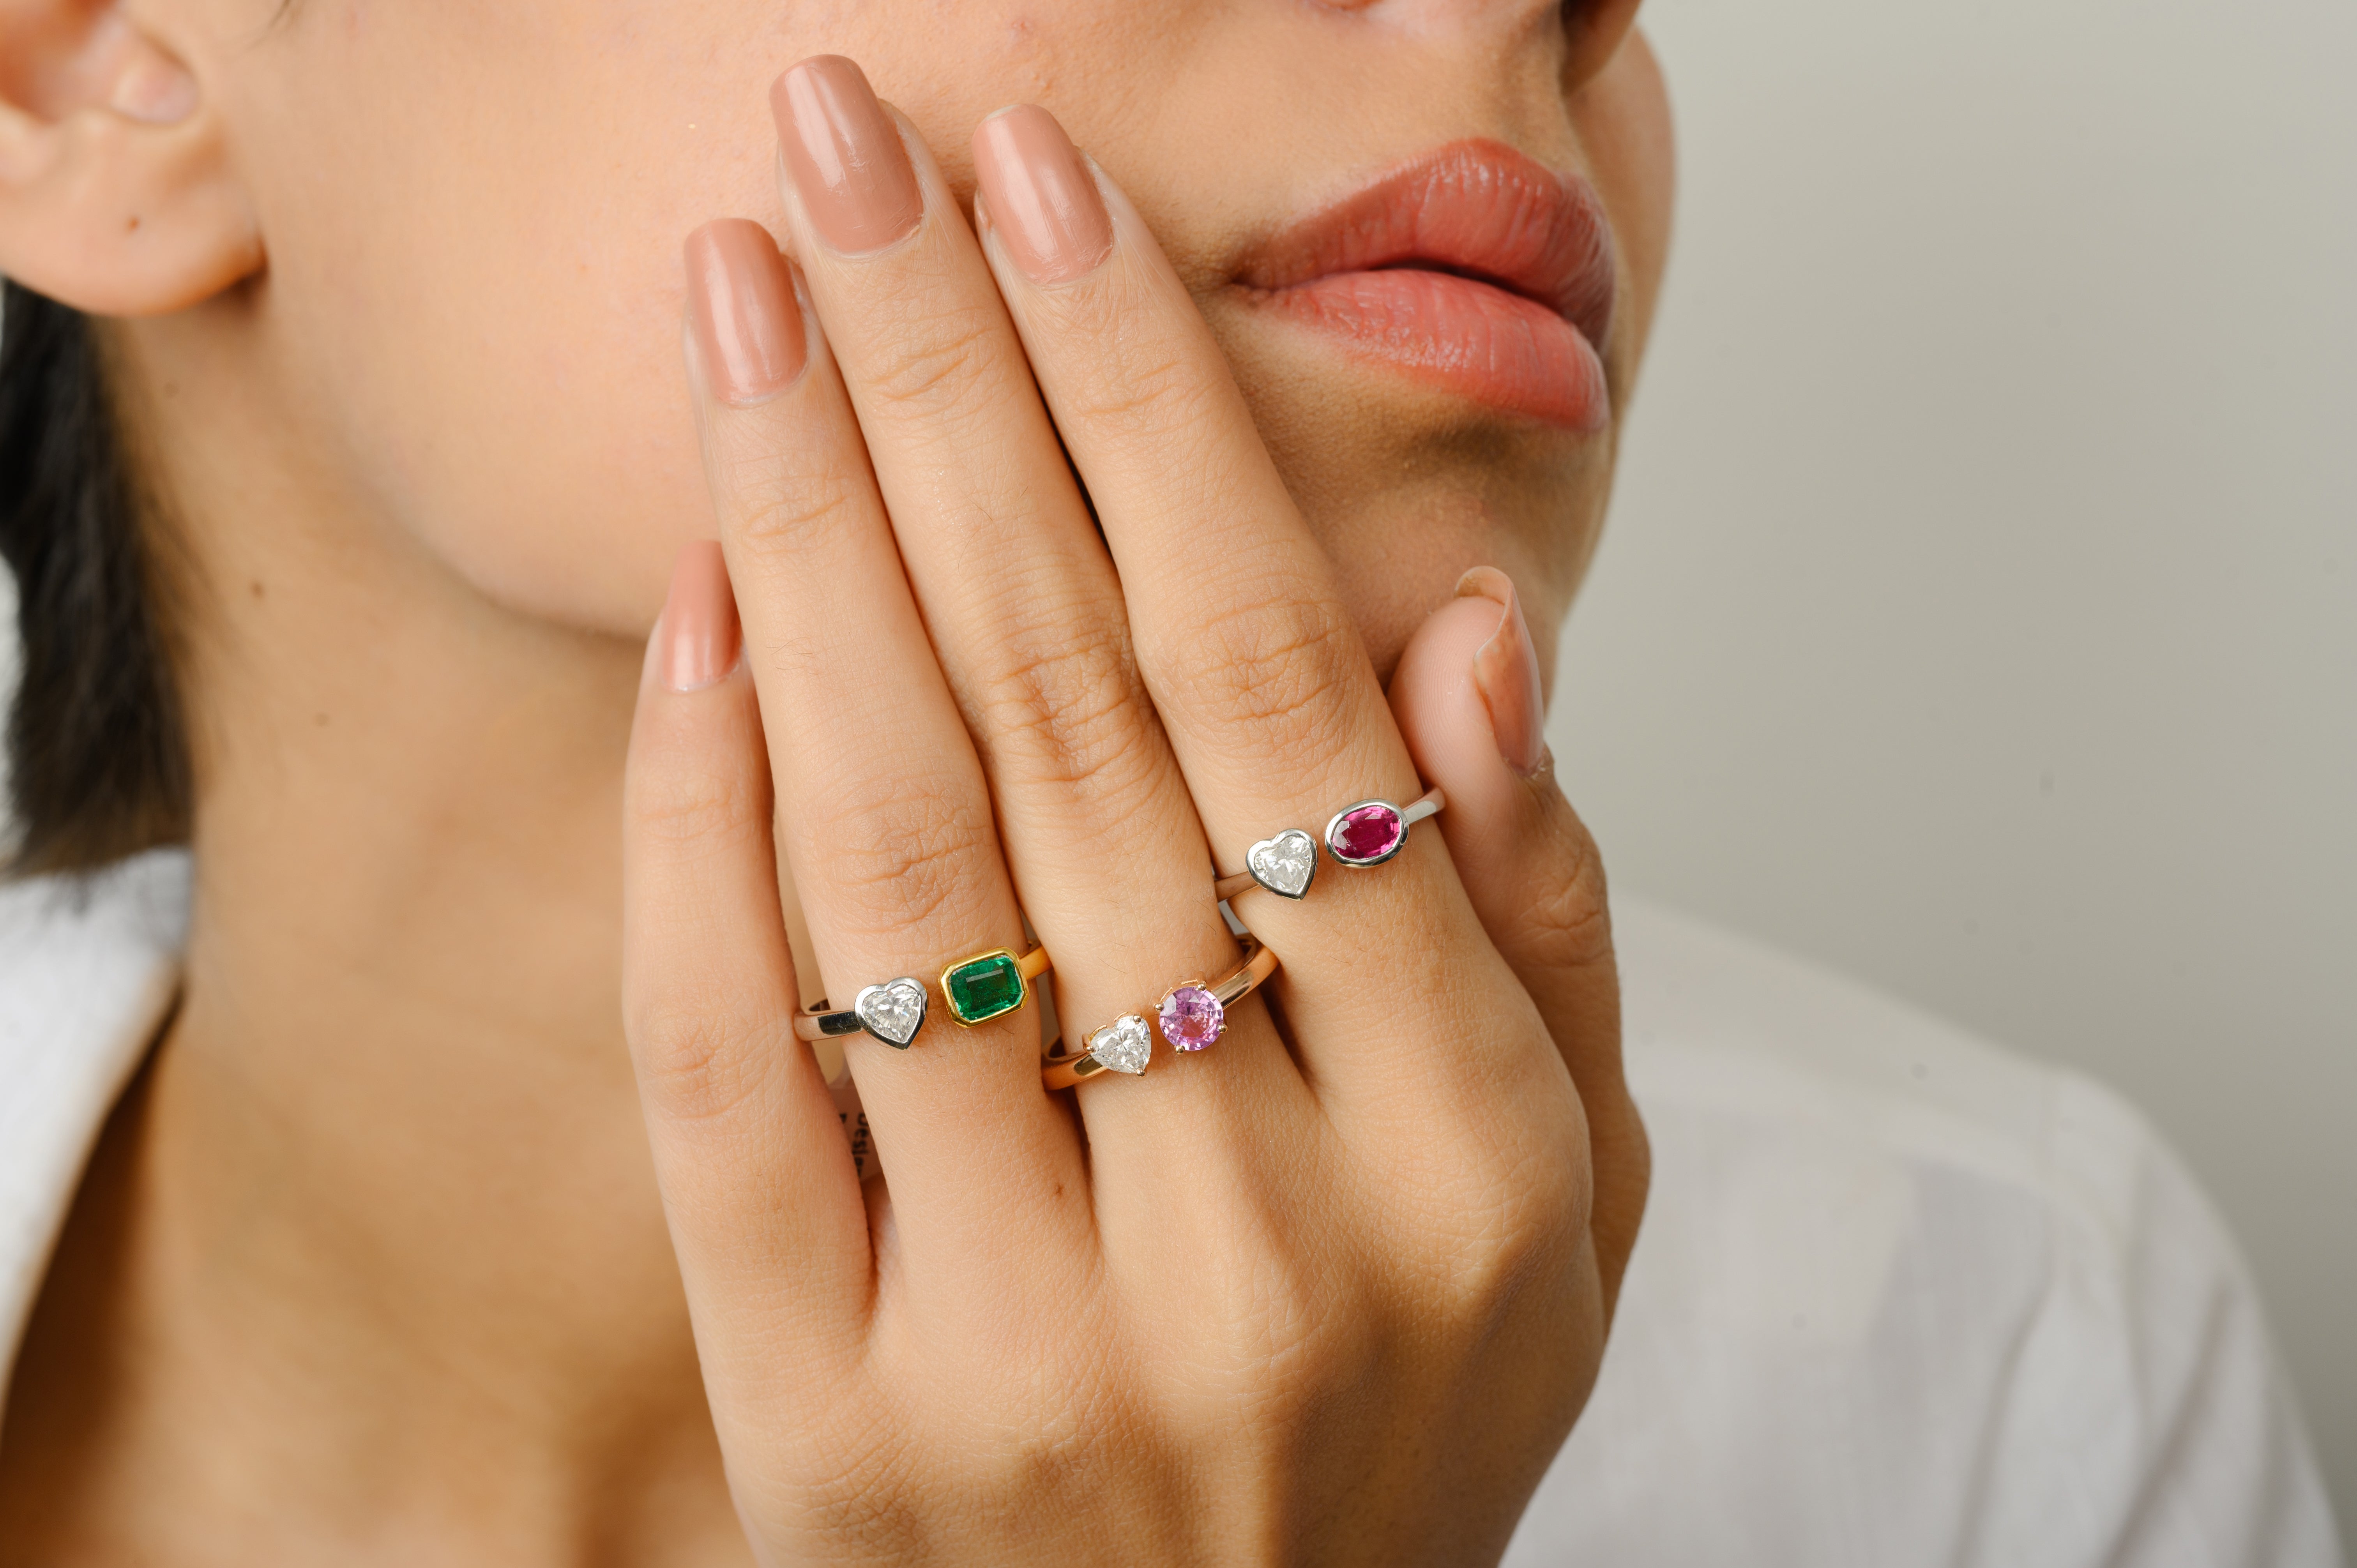 18K Rose Gold Pink Sapphire & Diamond Open Design Ring